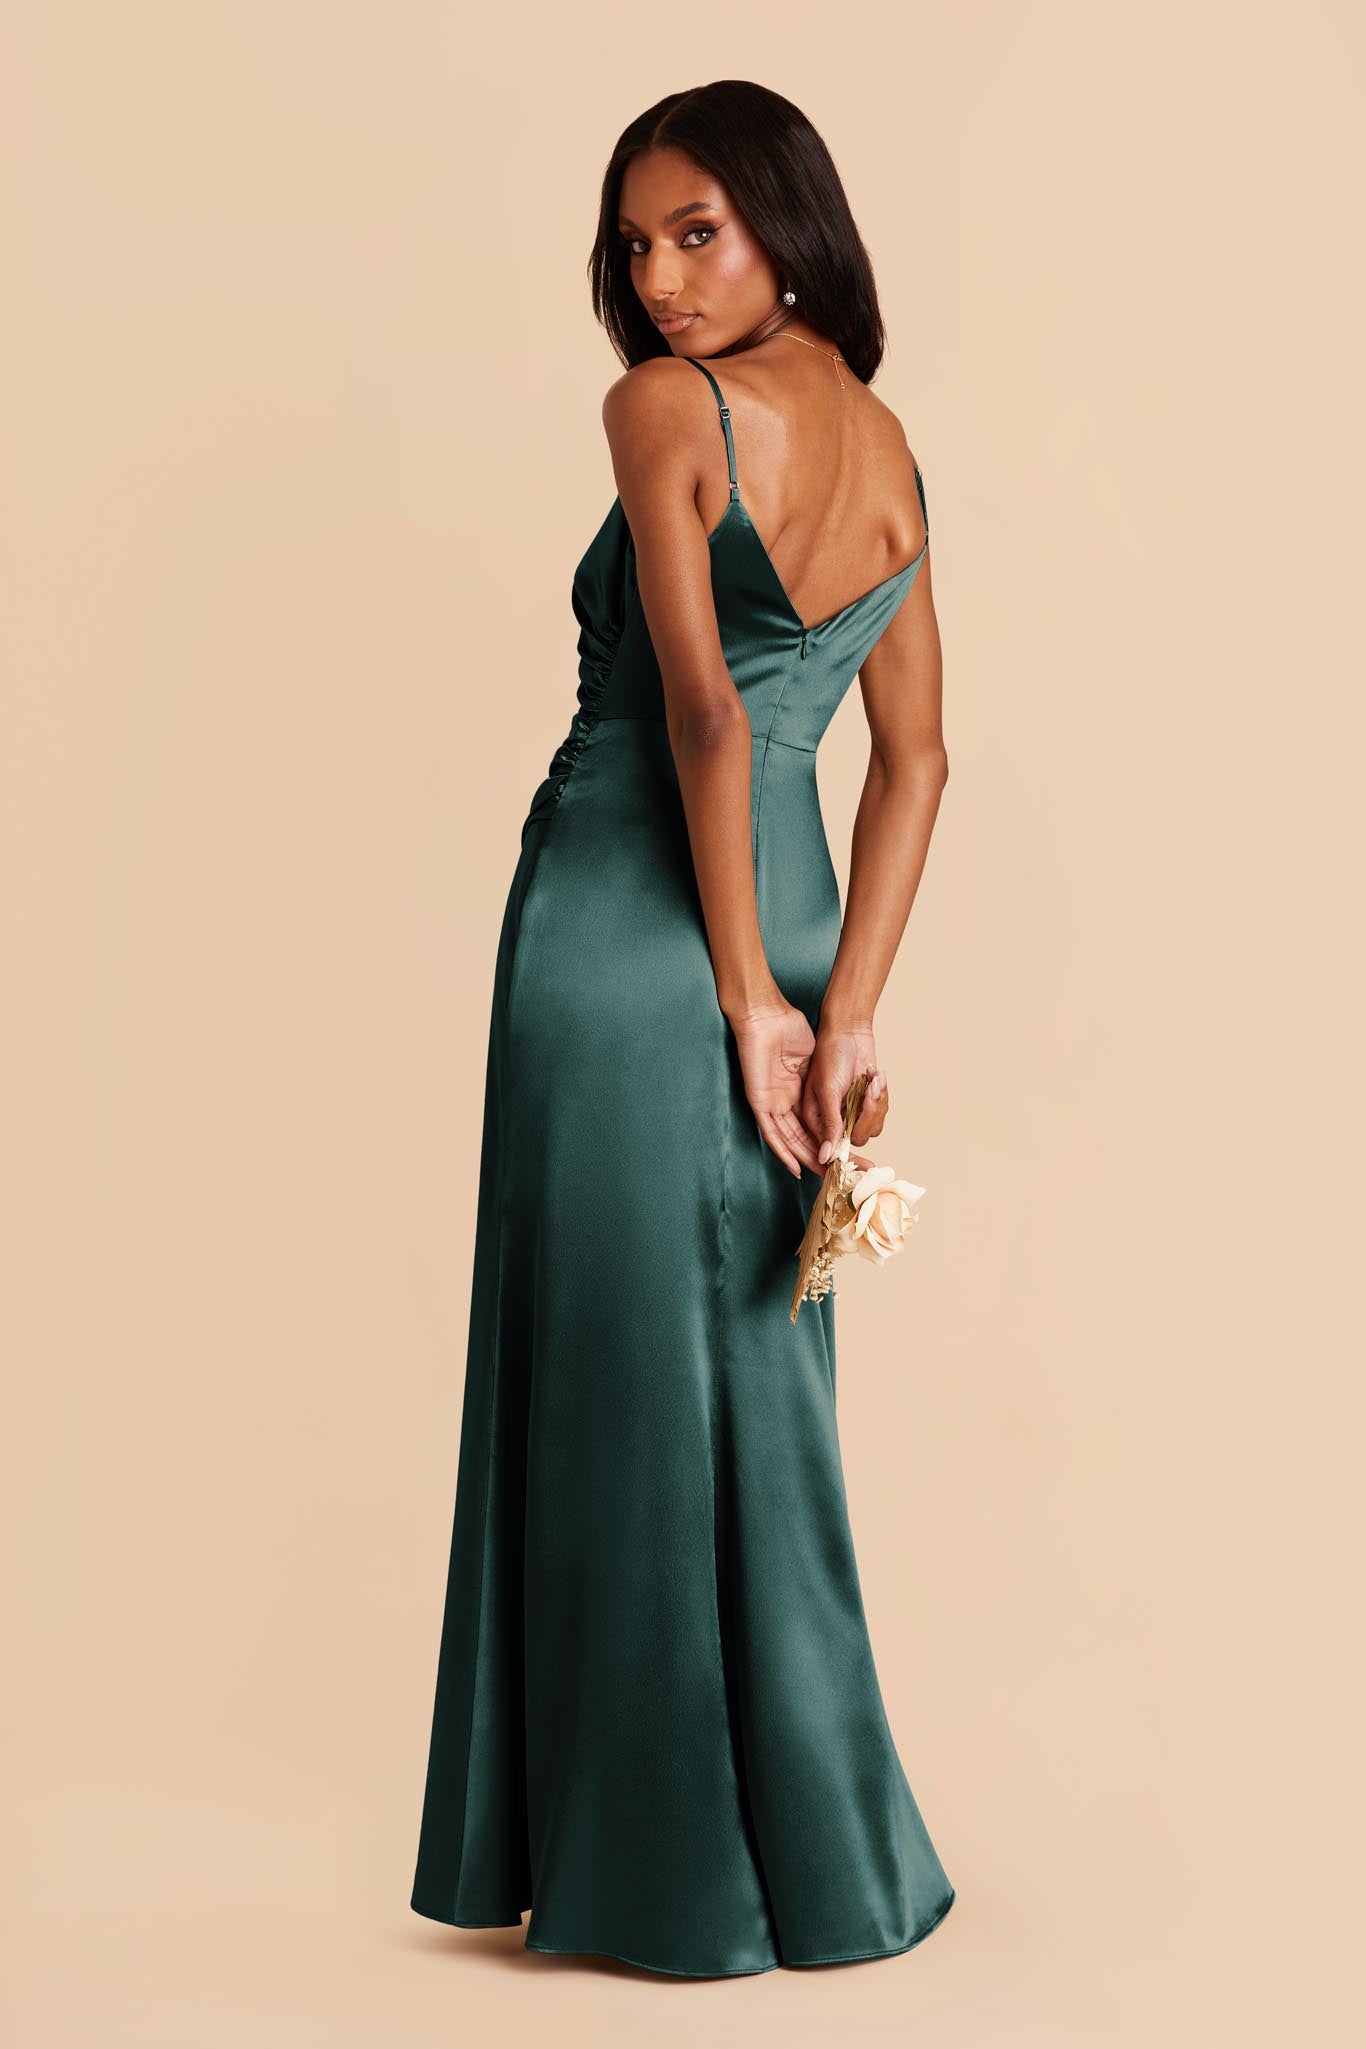 Catherine Satin Dress - Emerald